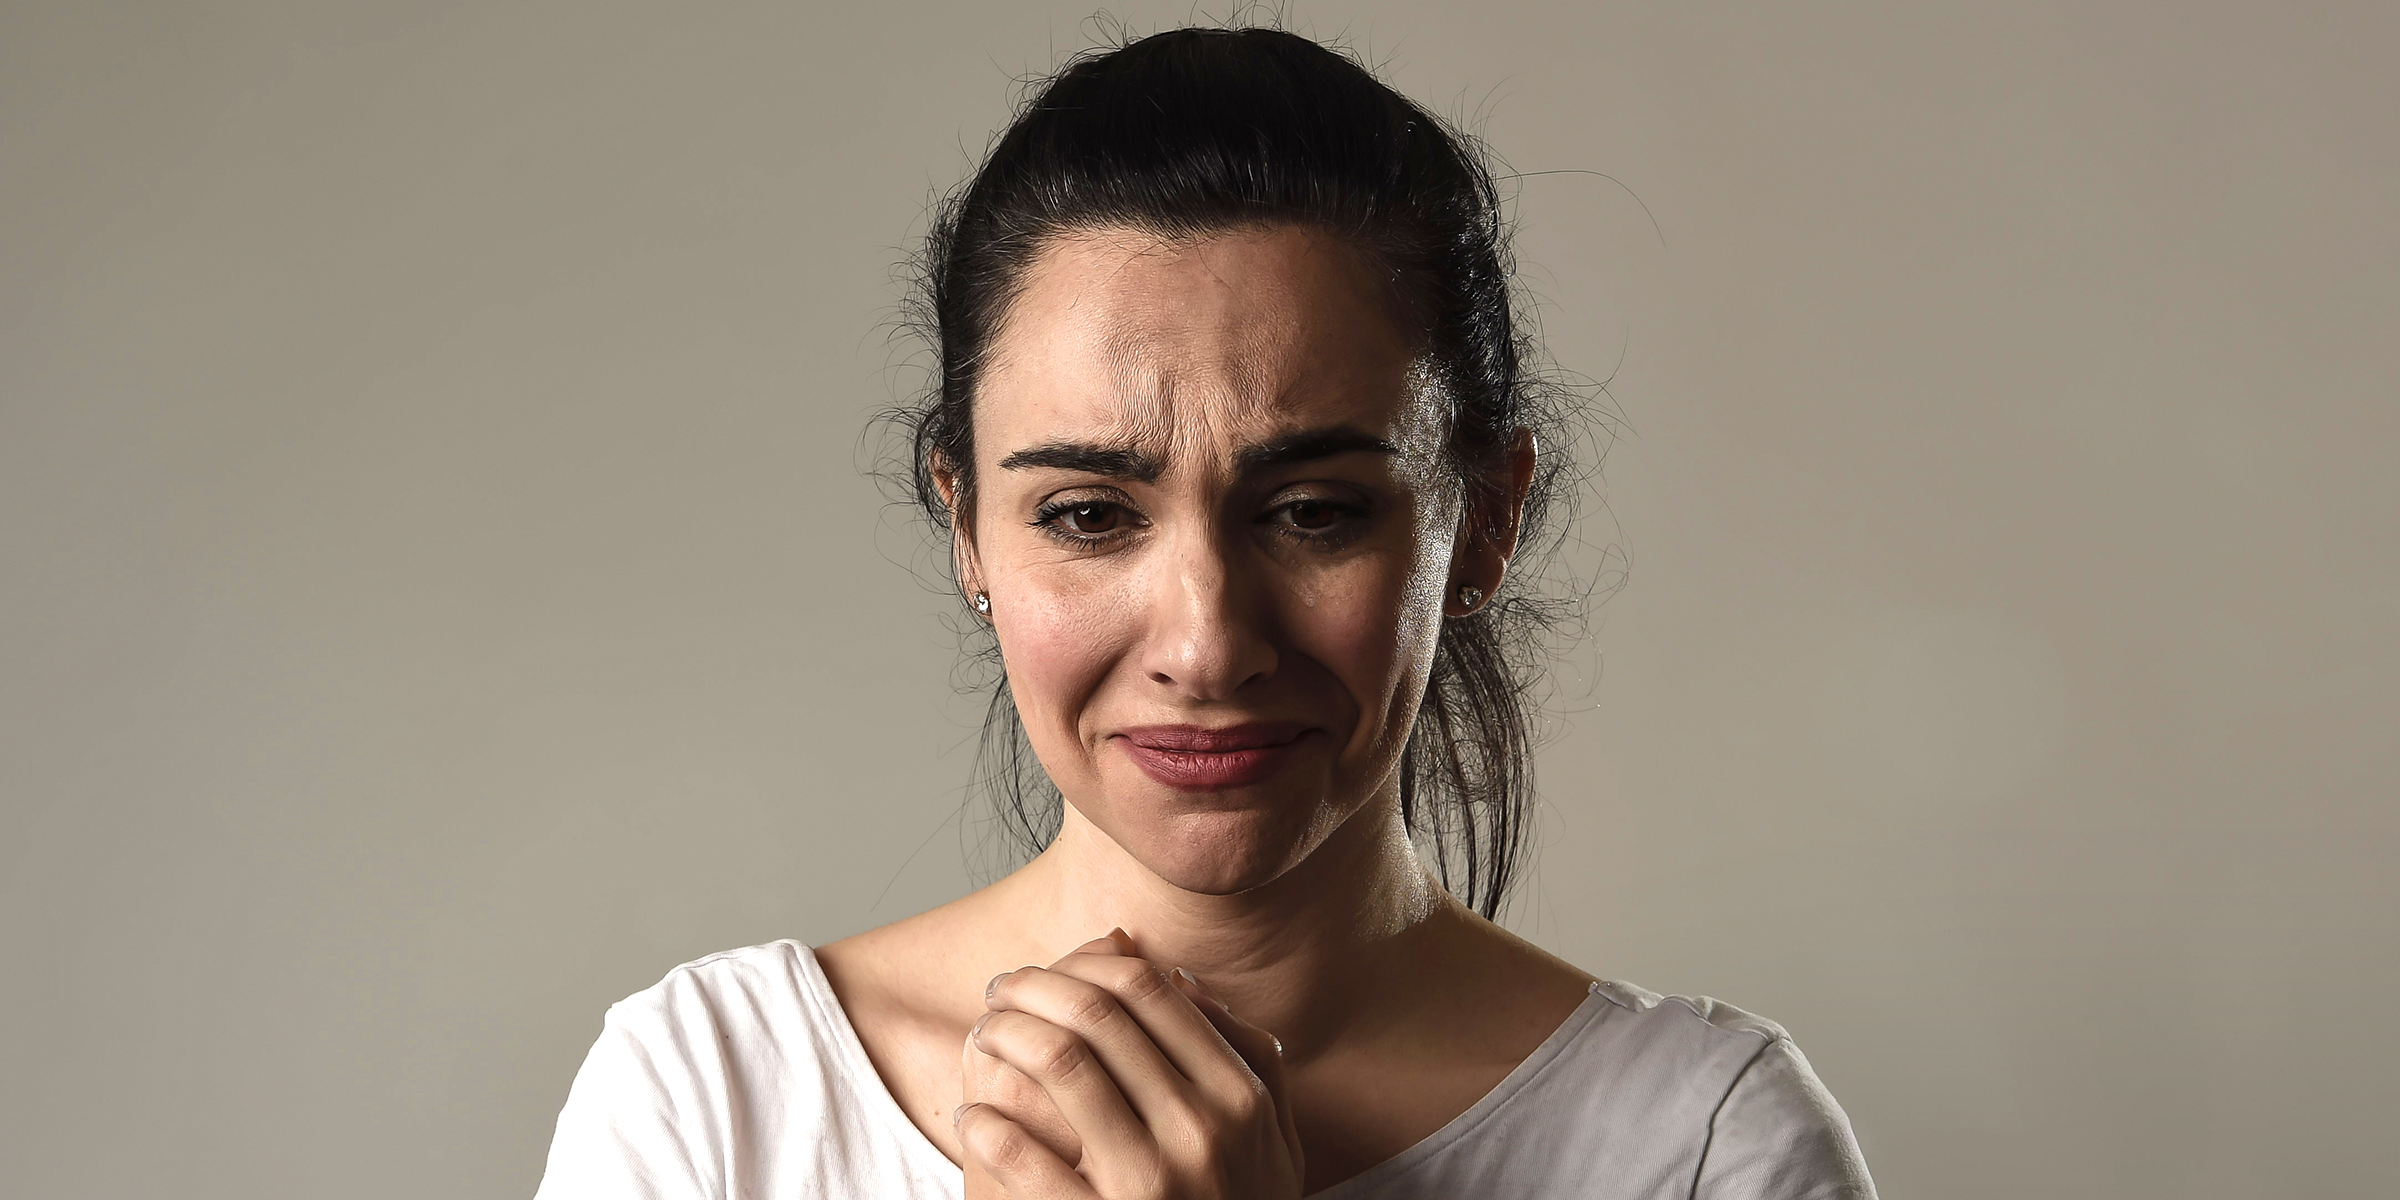 Frau unter Tränen | Quelle: Shutterstock